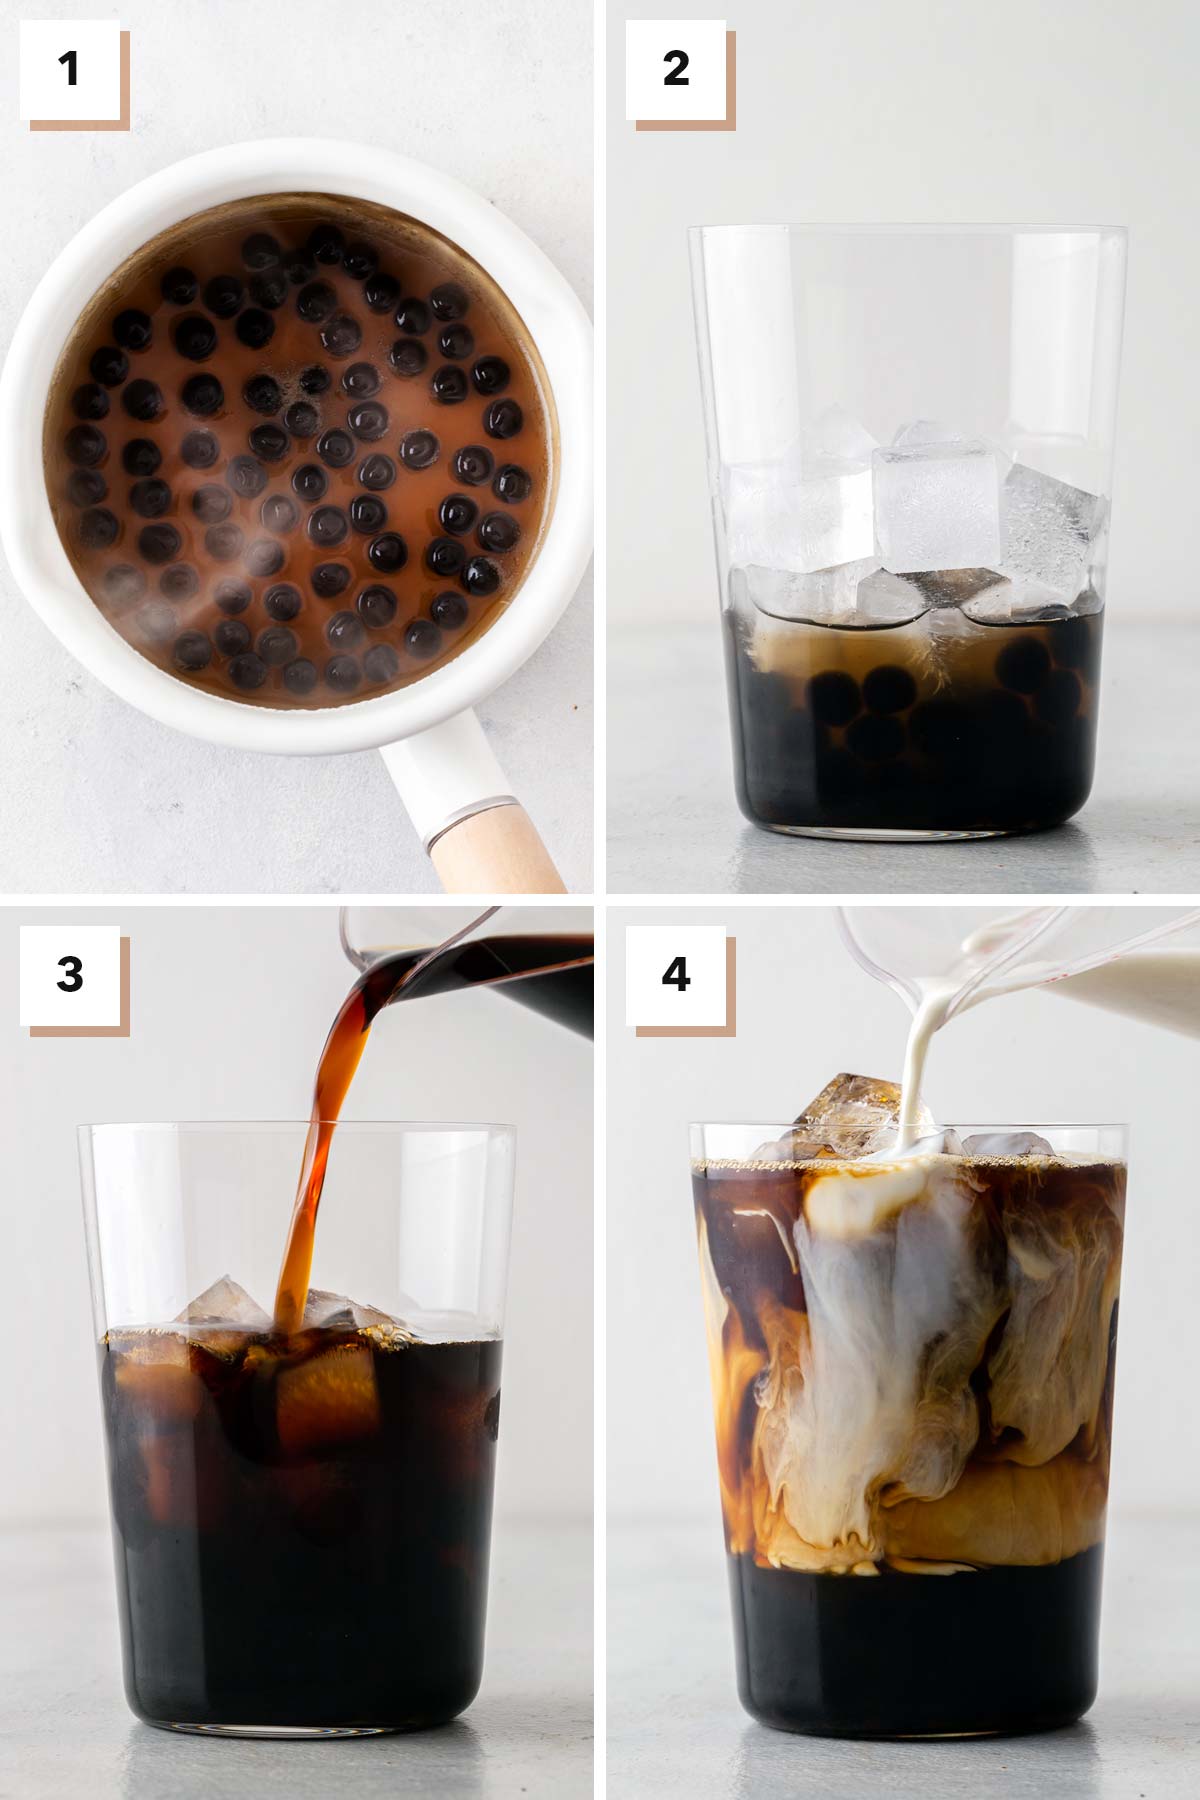 Iced Coffee Boba petunjuk langkah demi langkah tentang cara menyiapkan dan merakit minuman.